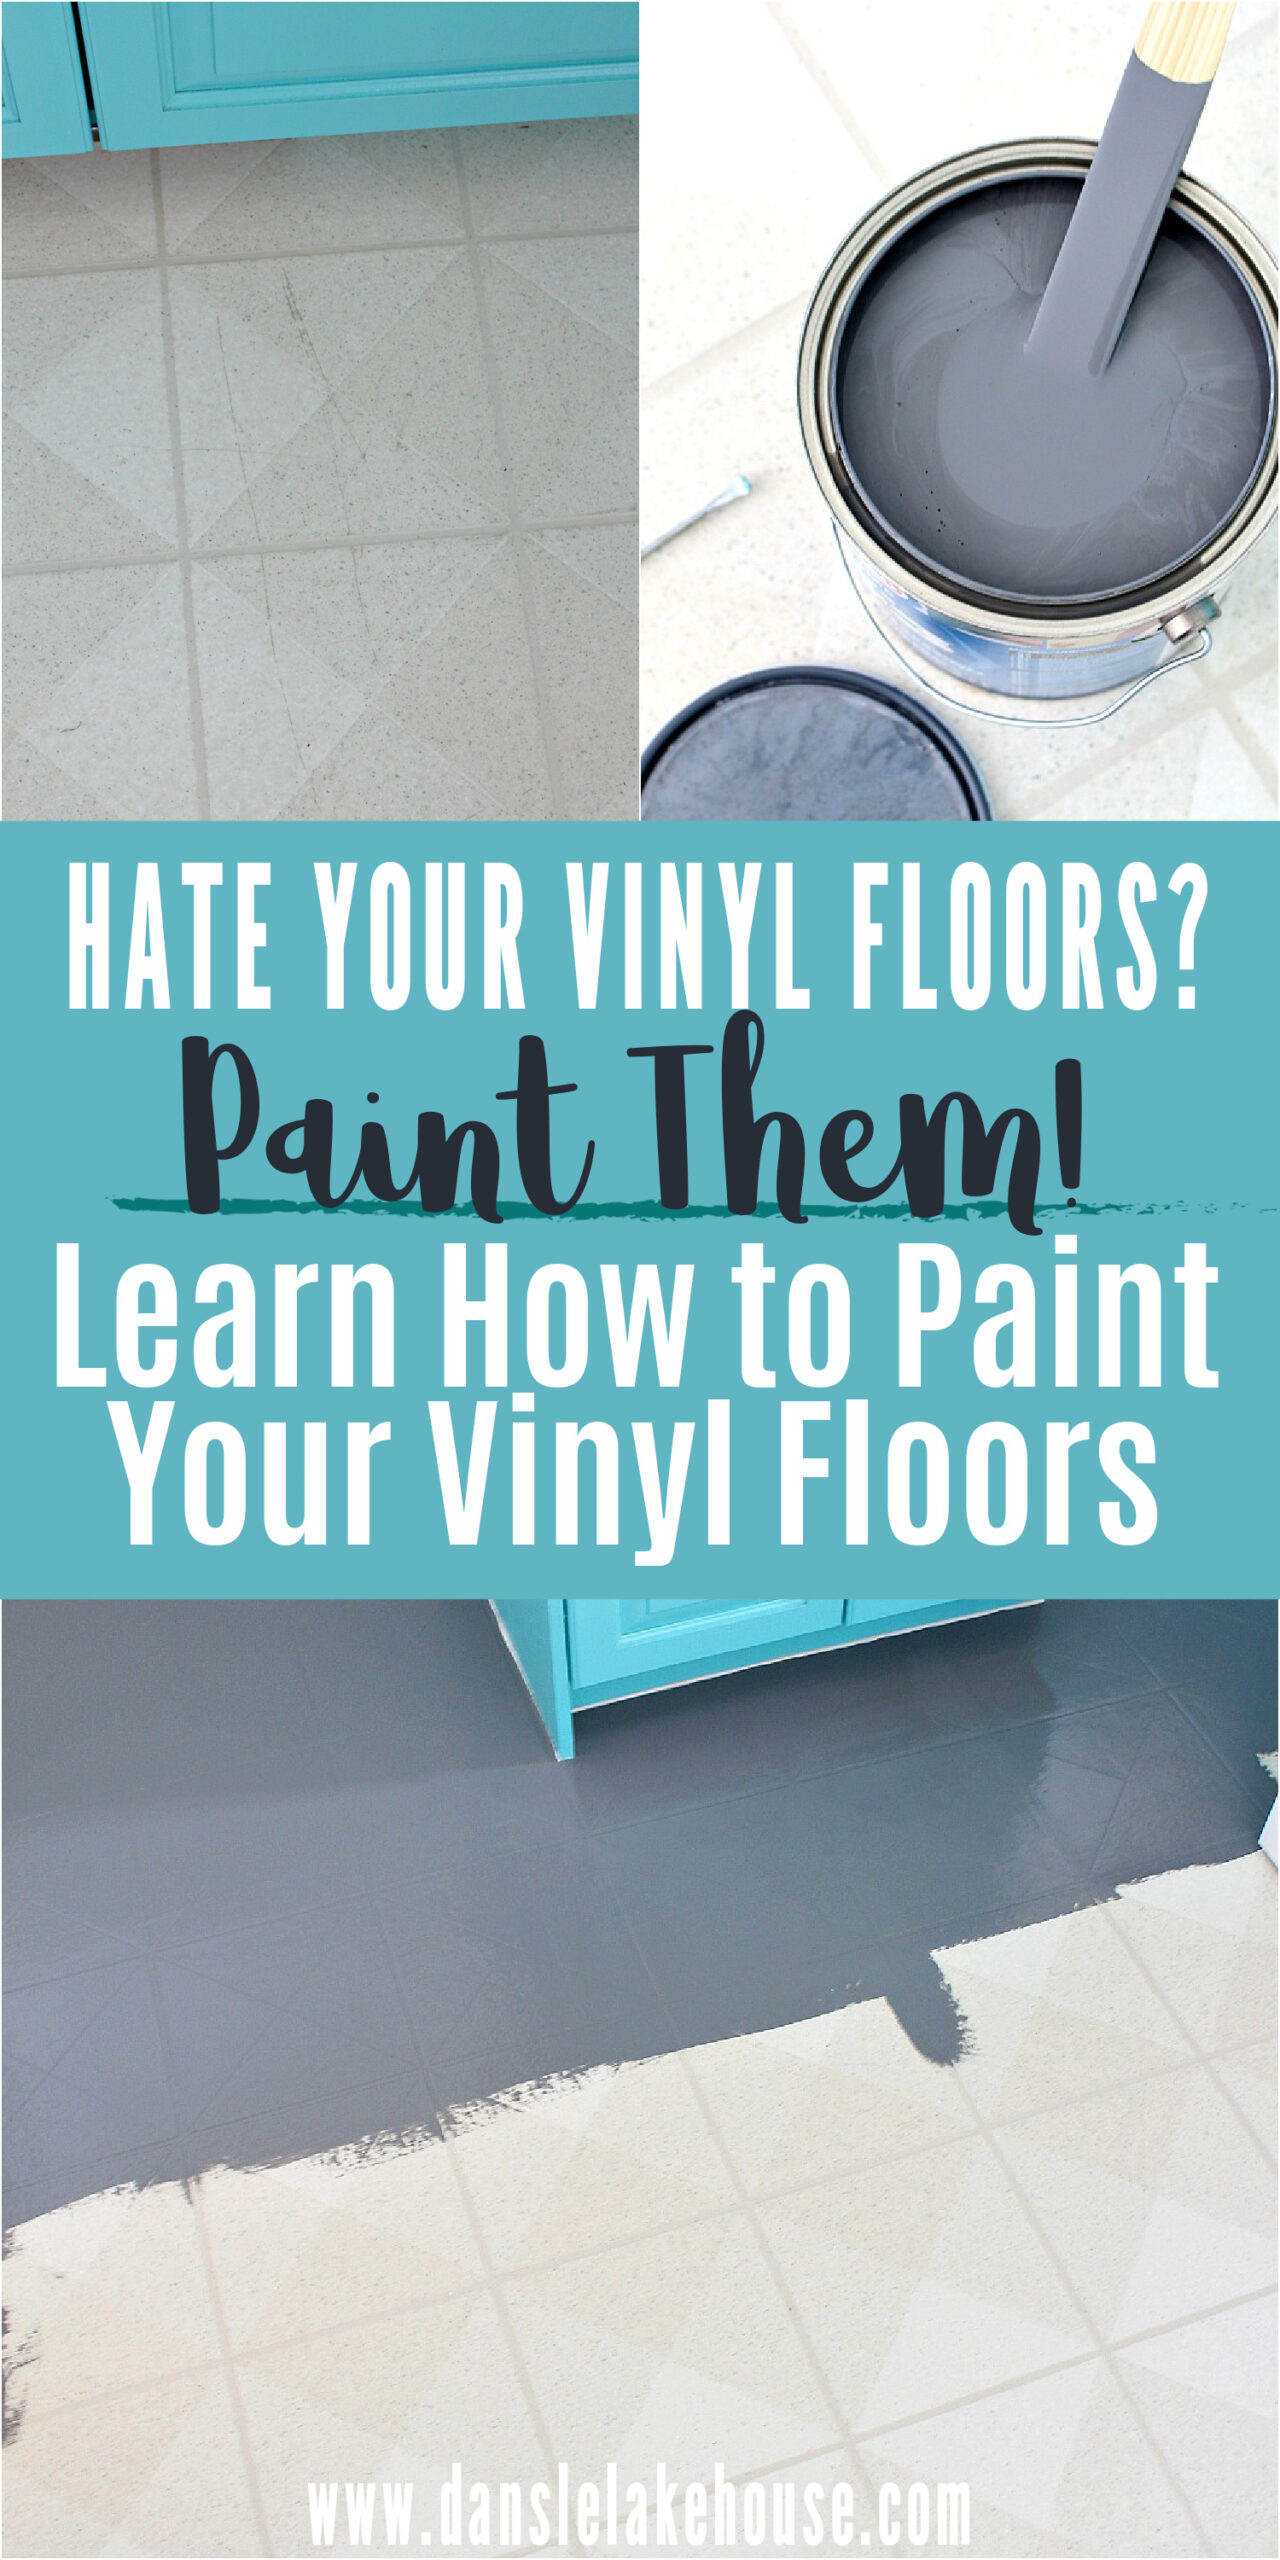 Hate your vinyl floors? Learn how to paint your vinyl floors!